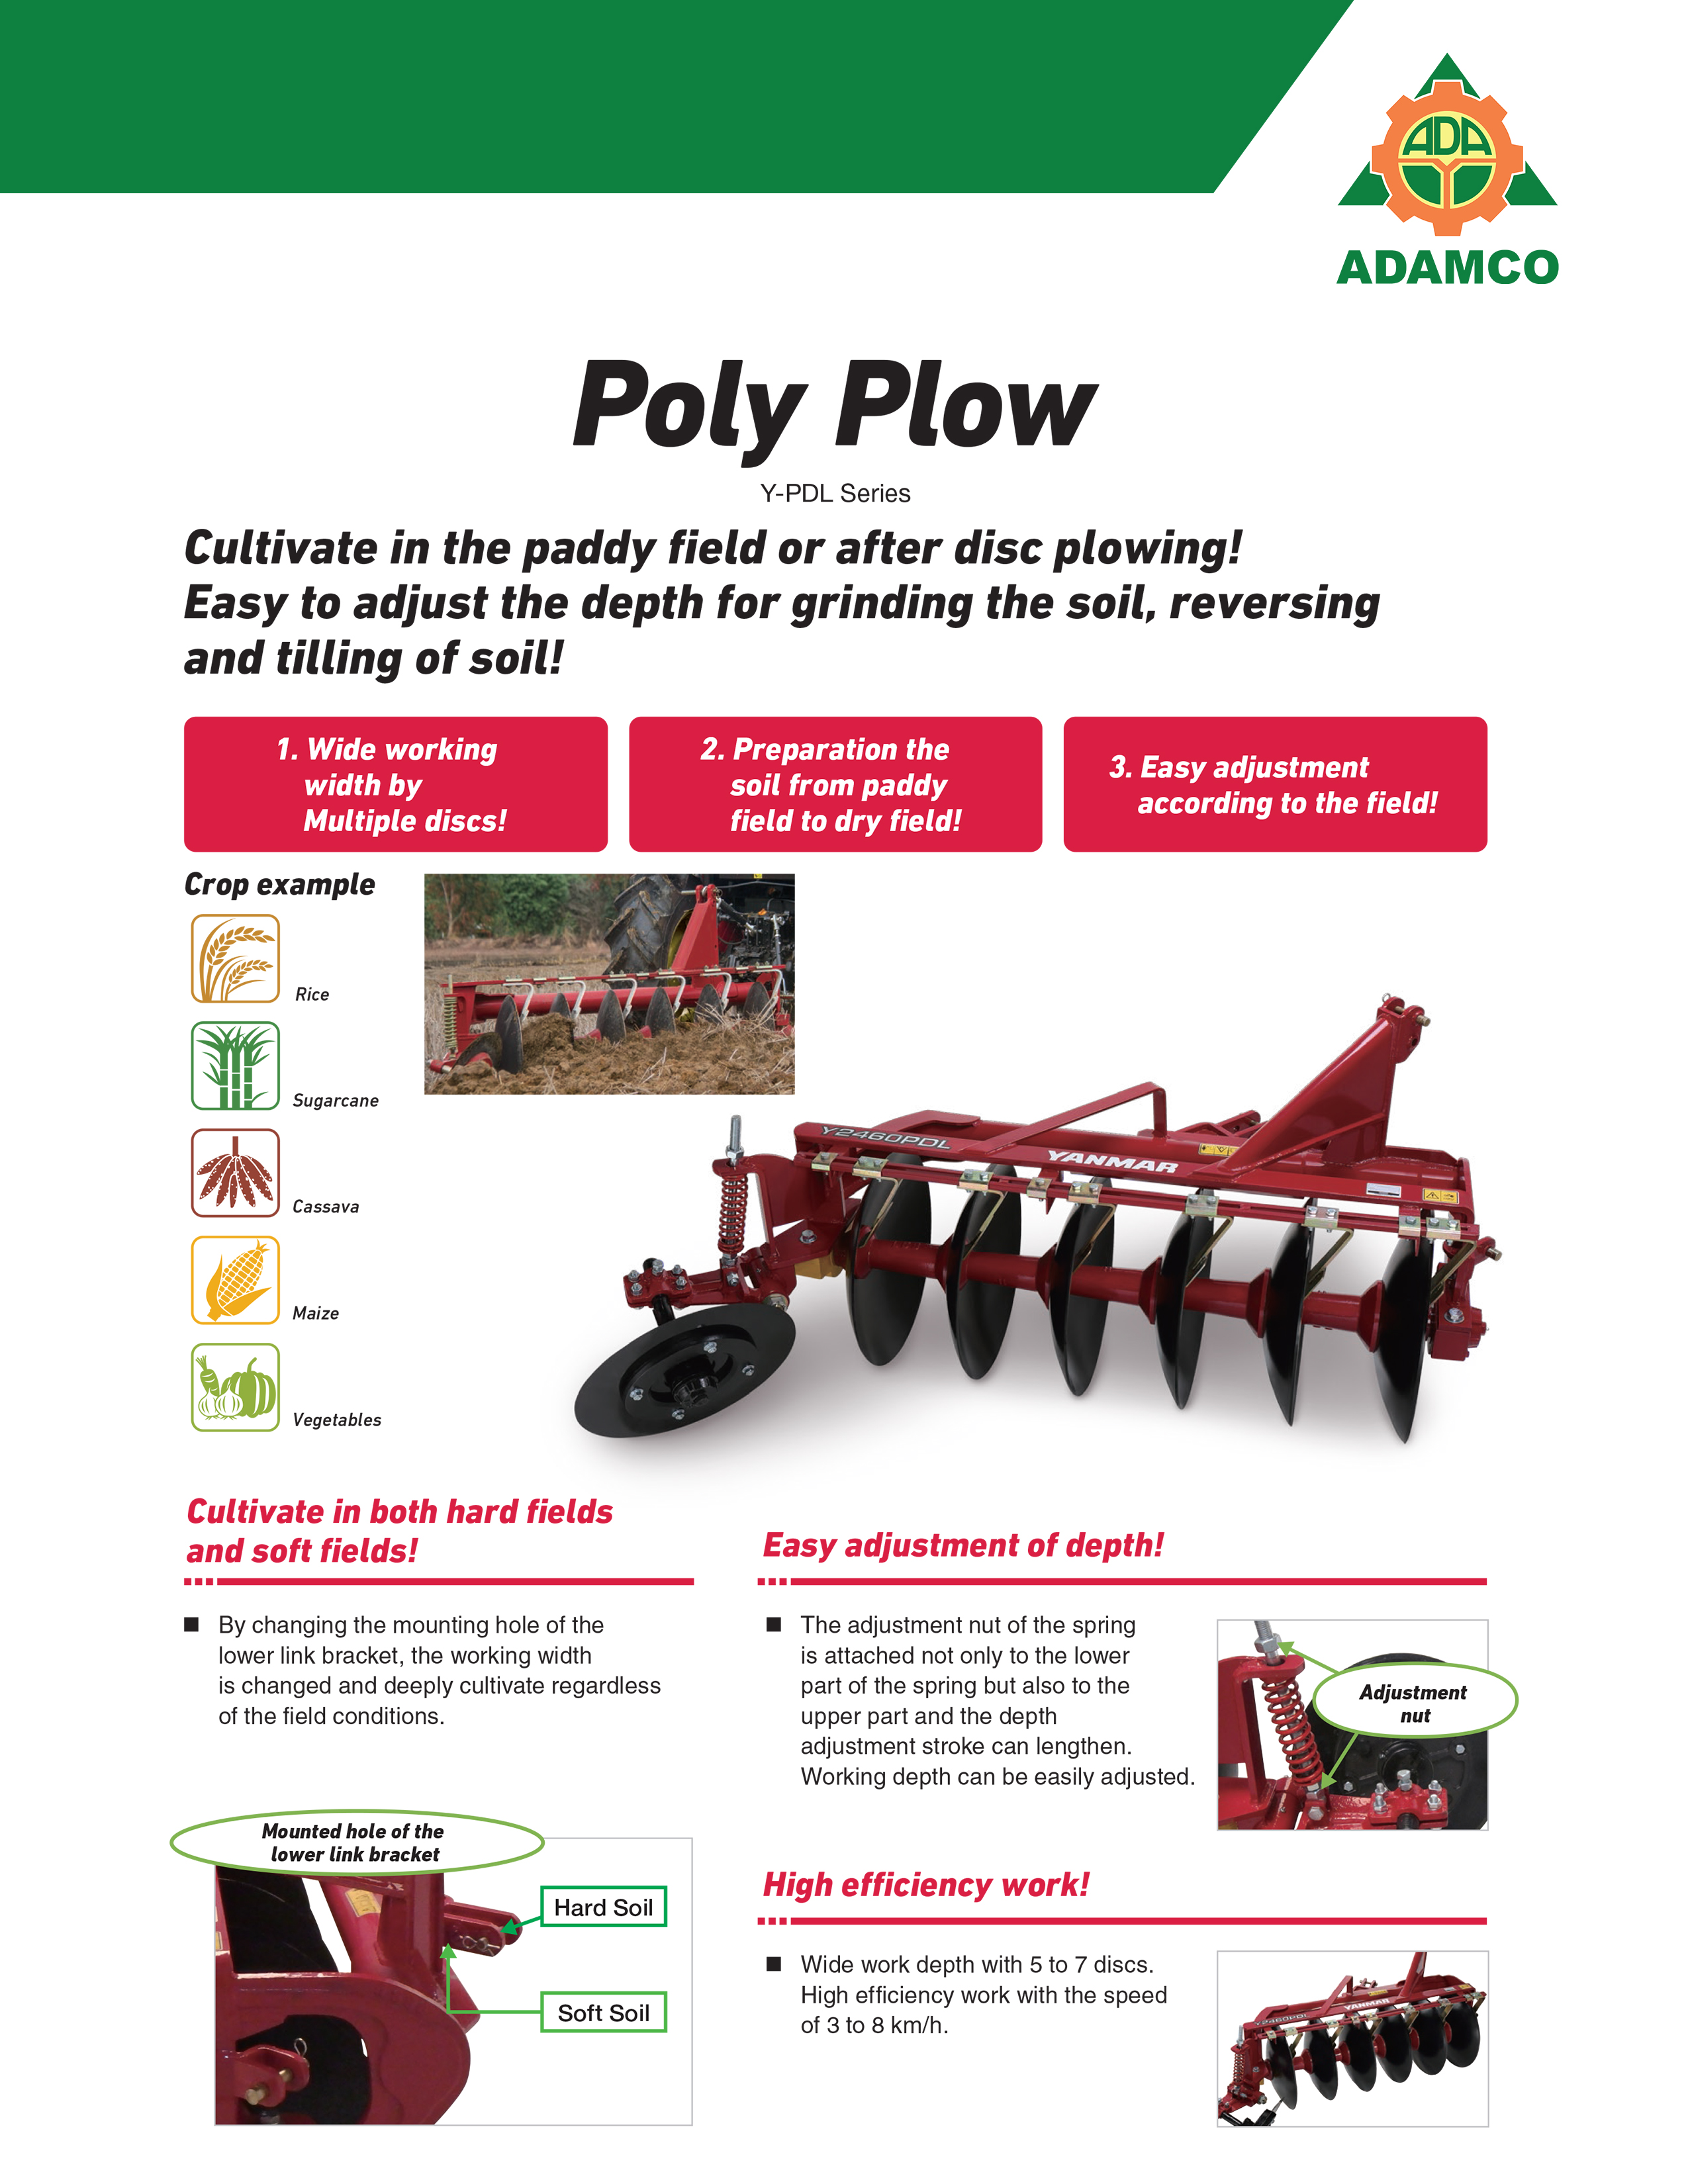 Poly Plow YPDL 1